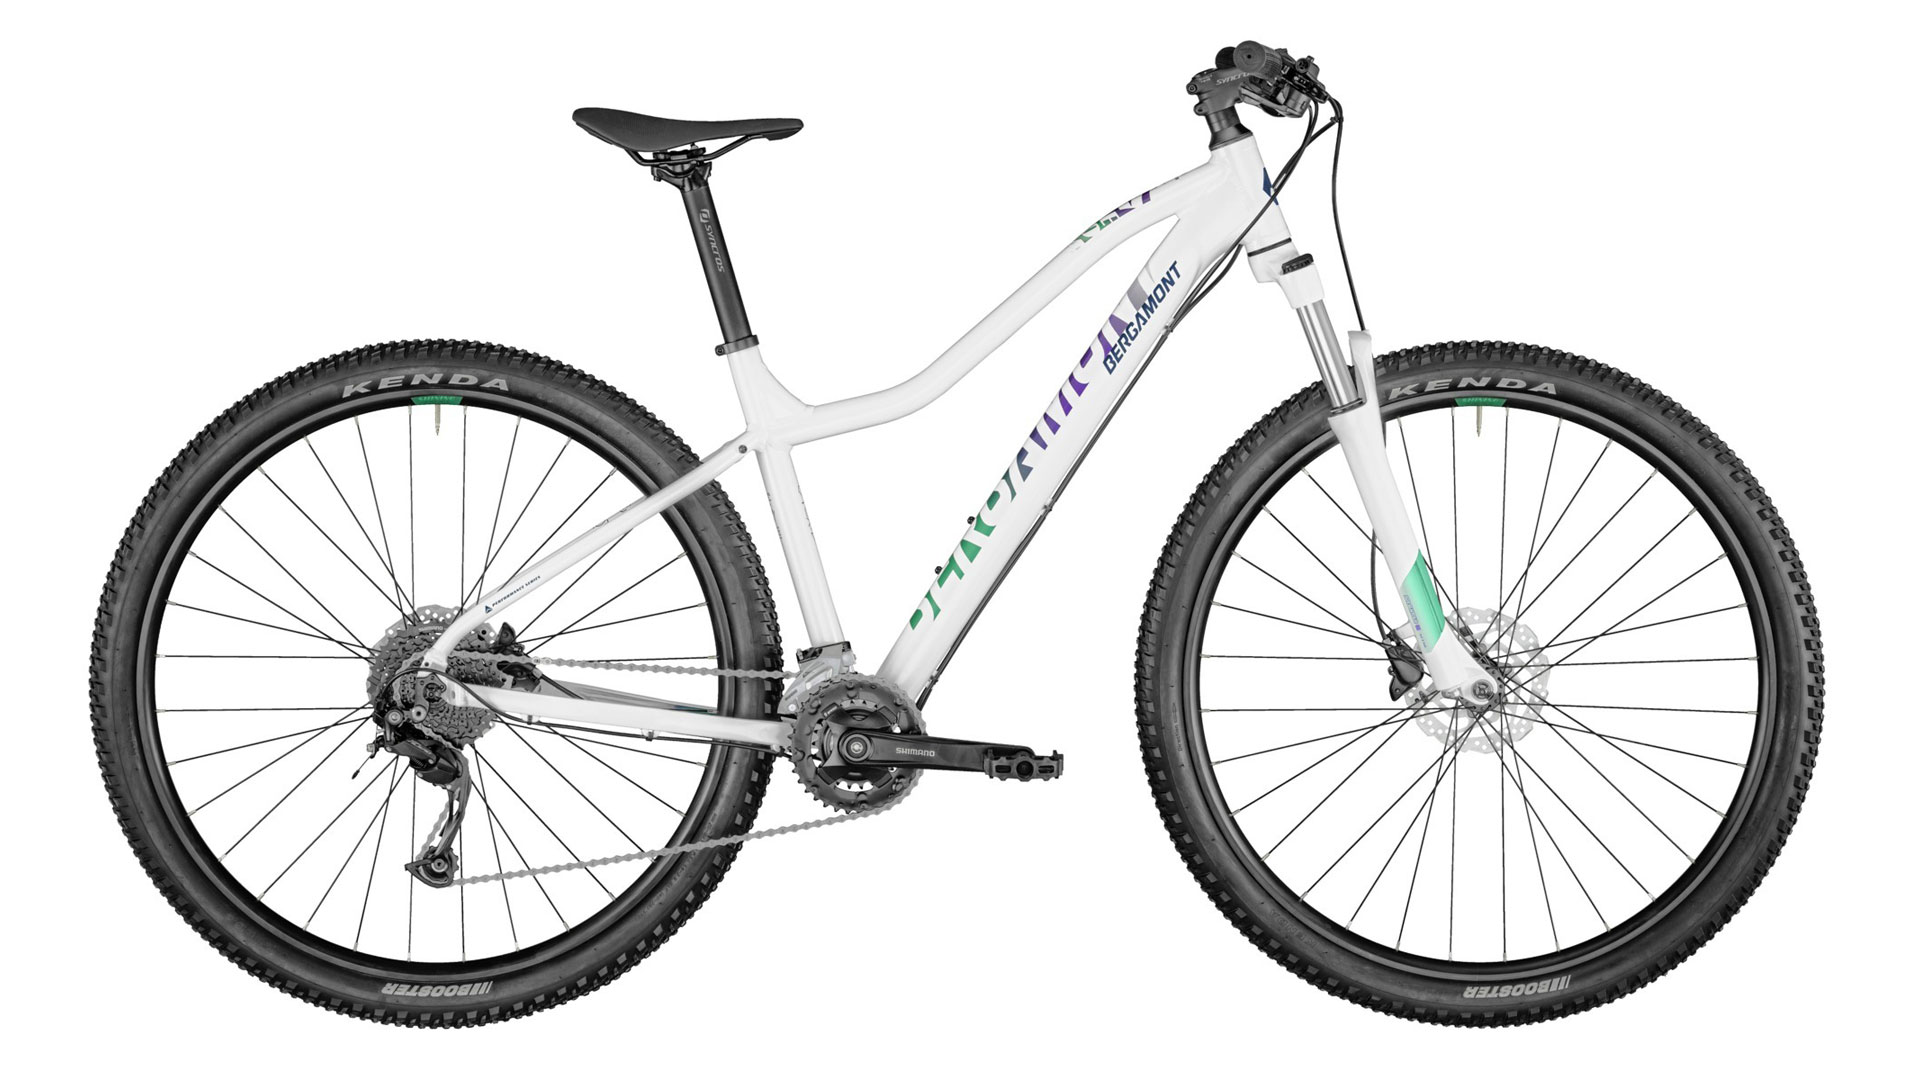  Отзывы о Женском велосипеде Bergamont Revox 4 FMN 29 2021